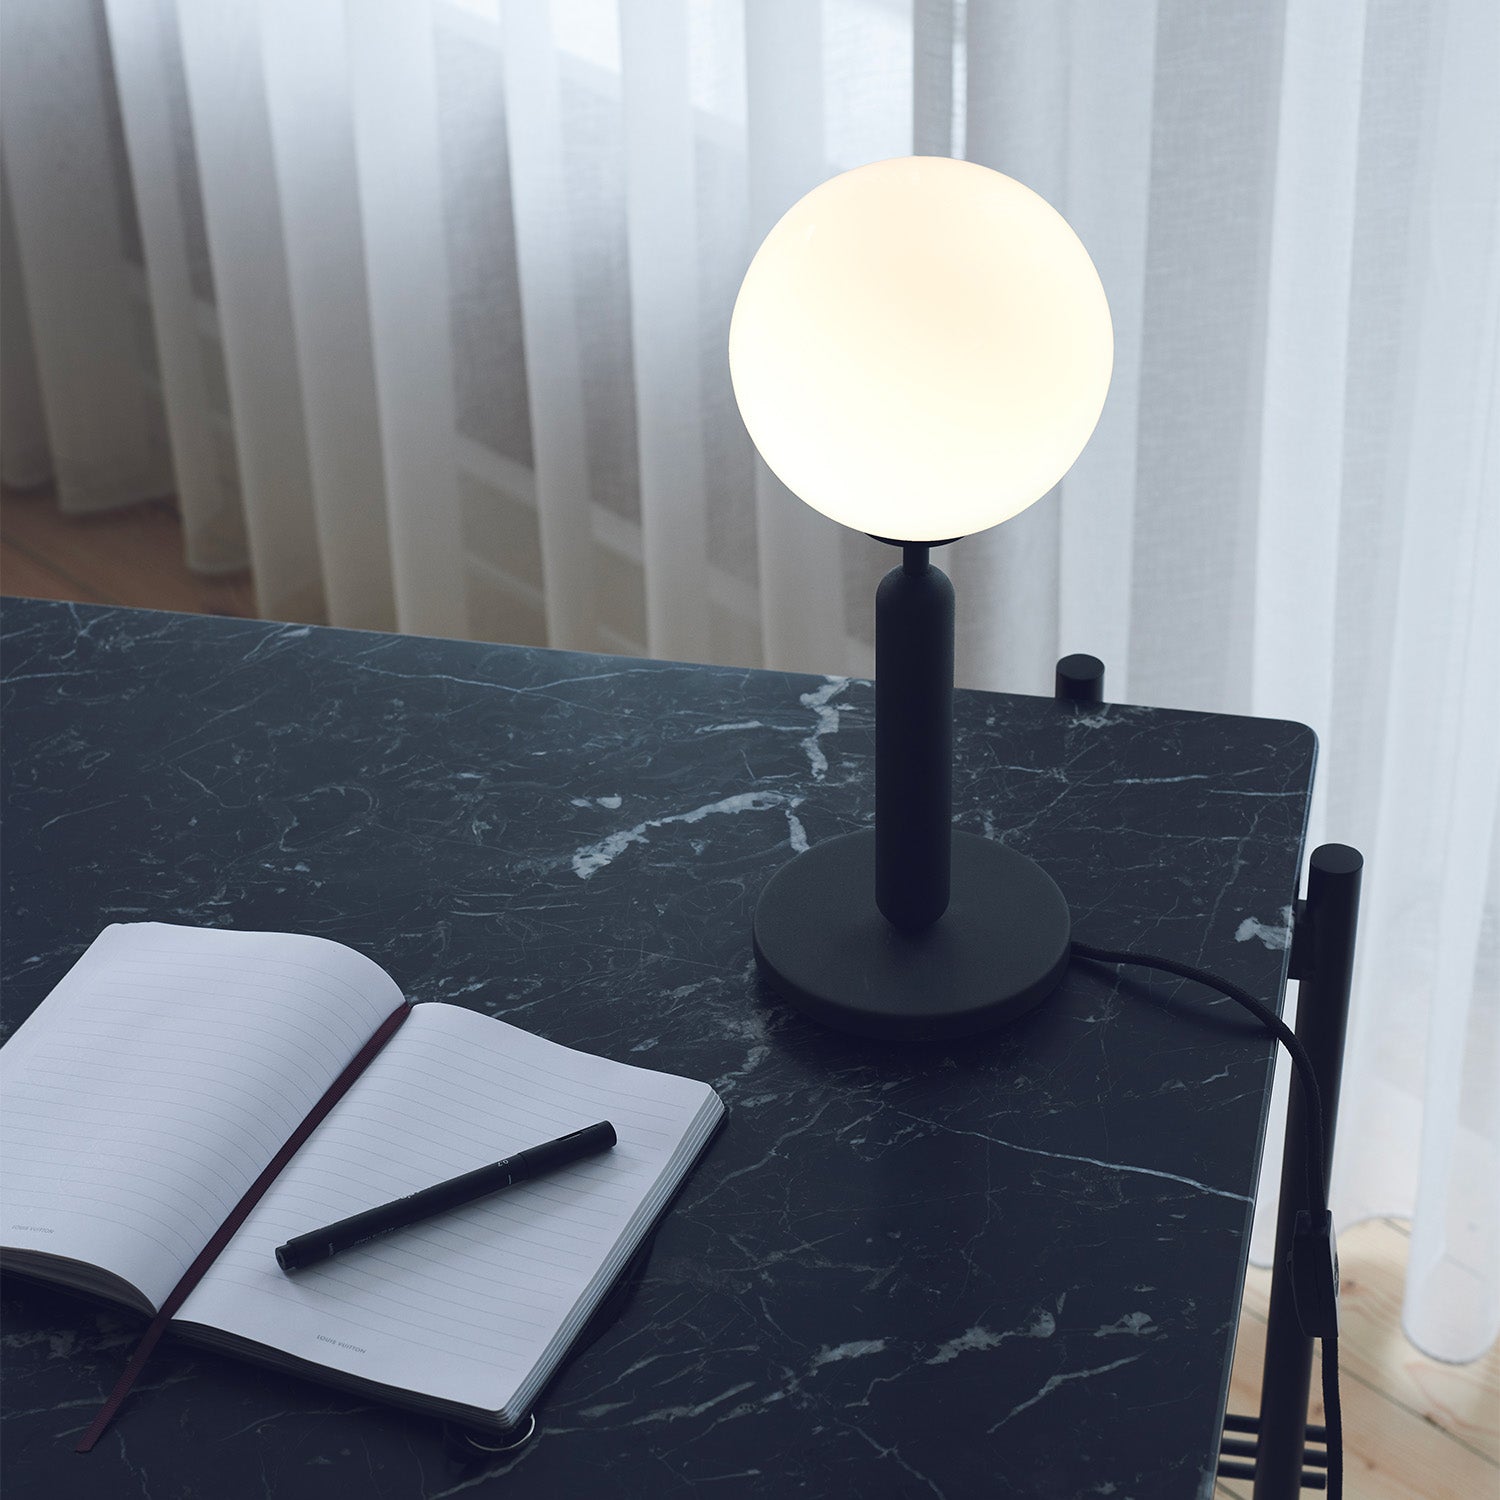 MIIRA Opal Table - Lampe à poser élégante haut de gamme bureau